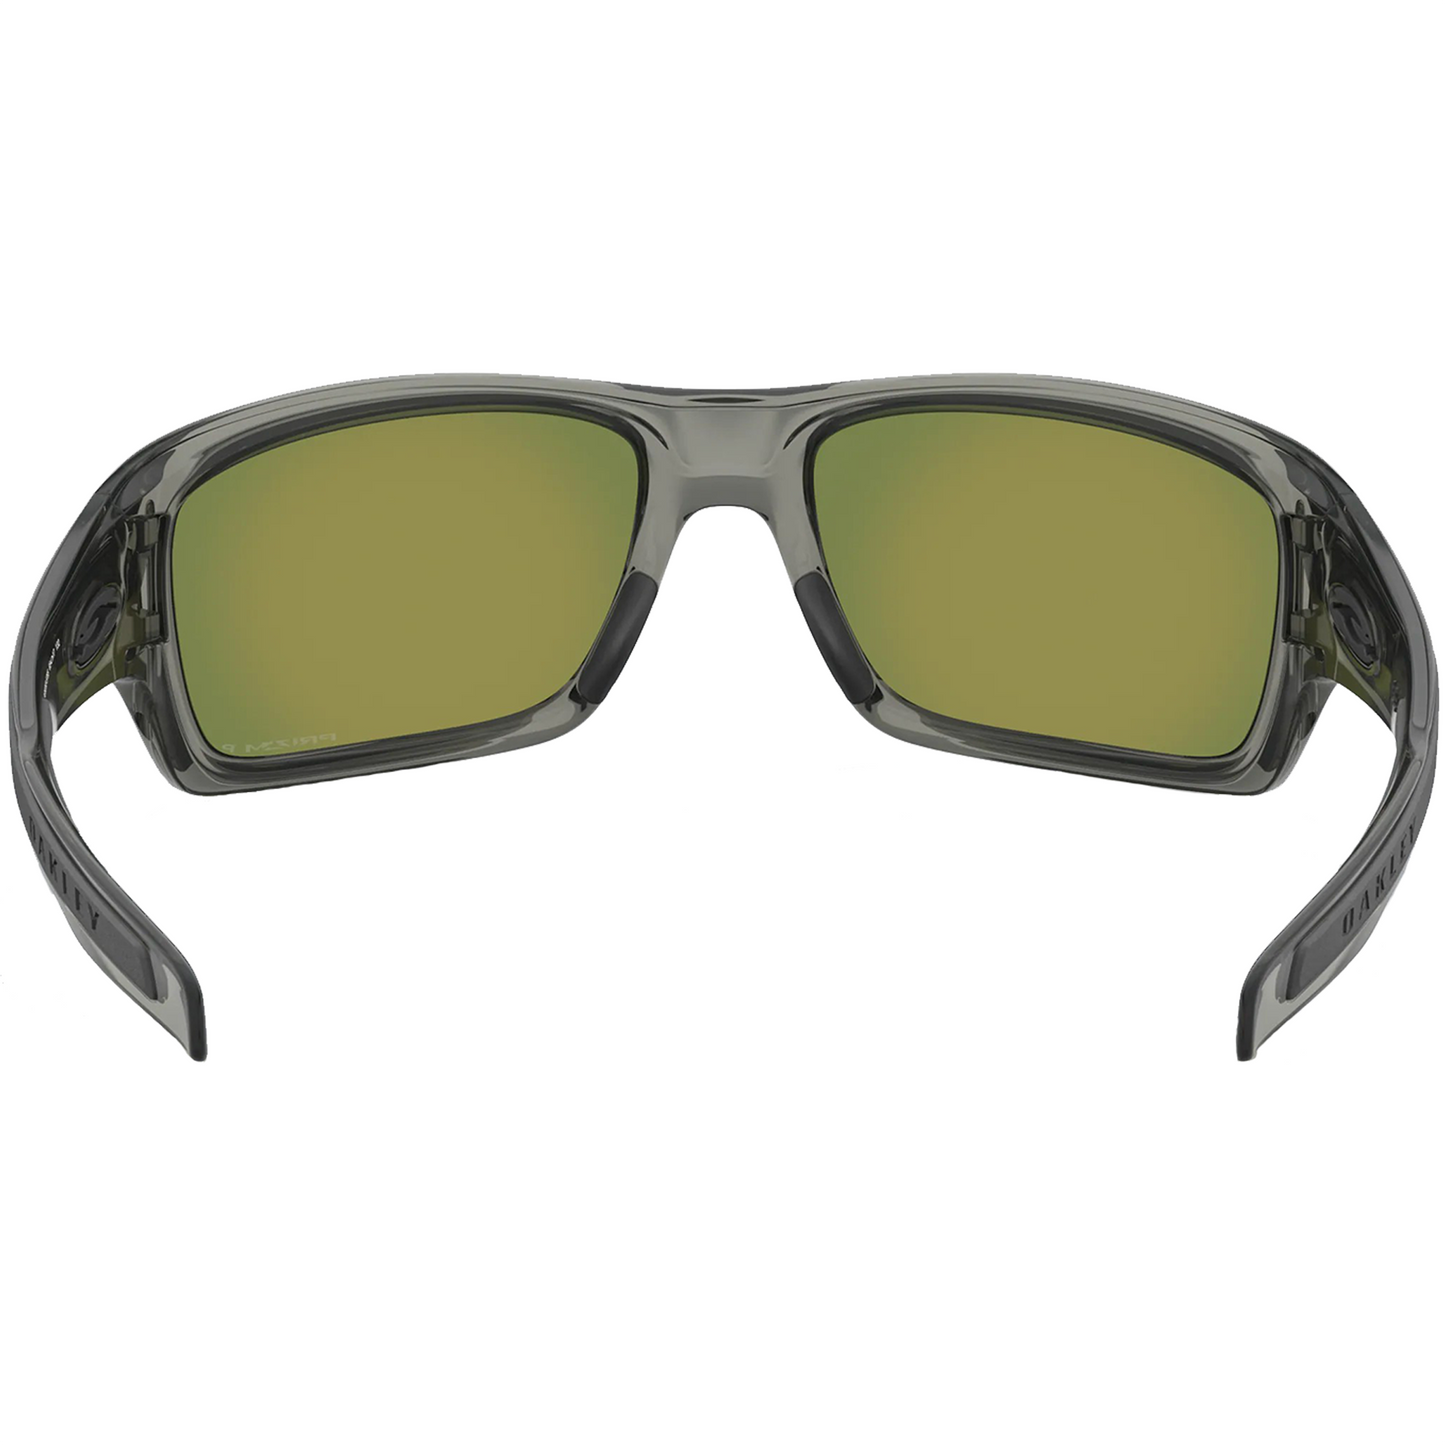 Oakley Turbine Sunglasses (Grey Ink) Prizm Ruby Polarized Lens - Free Case